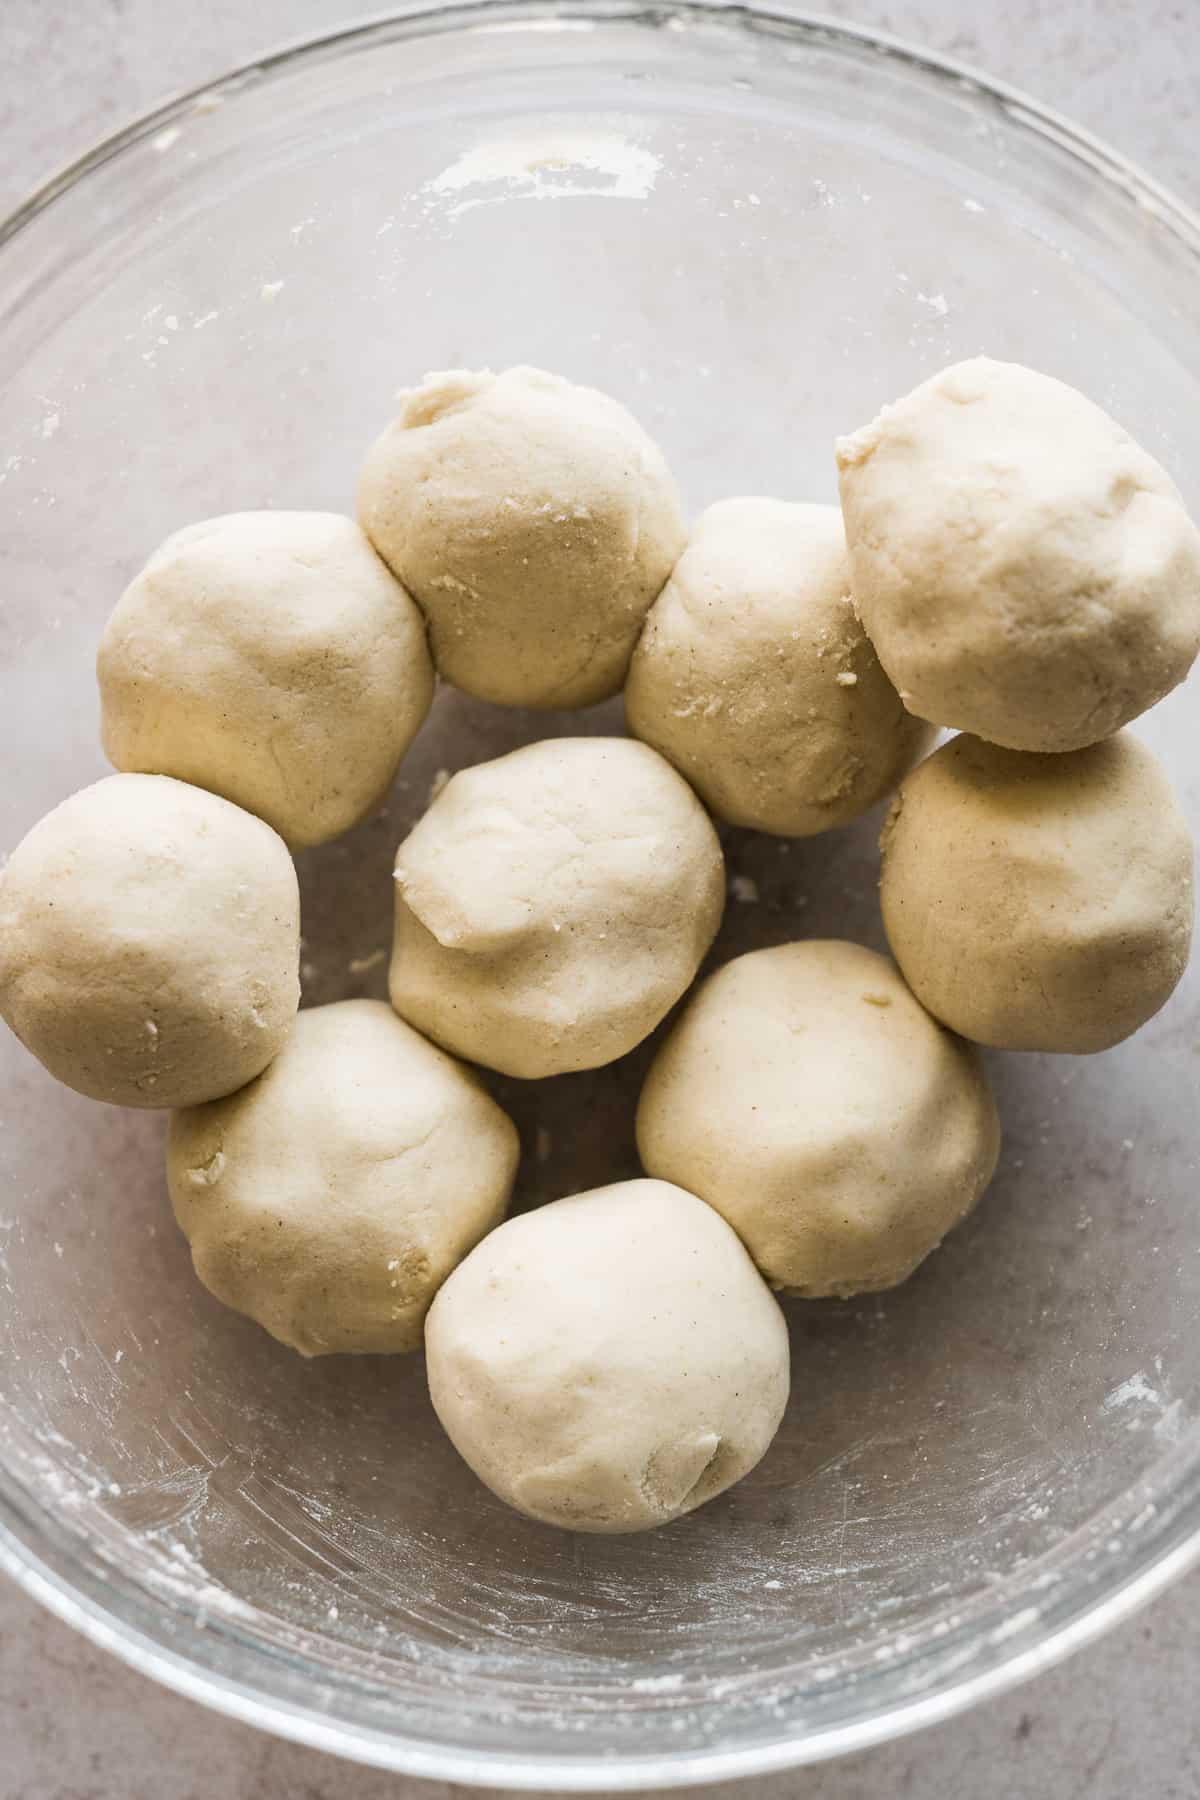 10 balls of masa harina dough in a bowl.